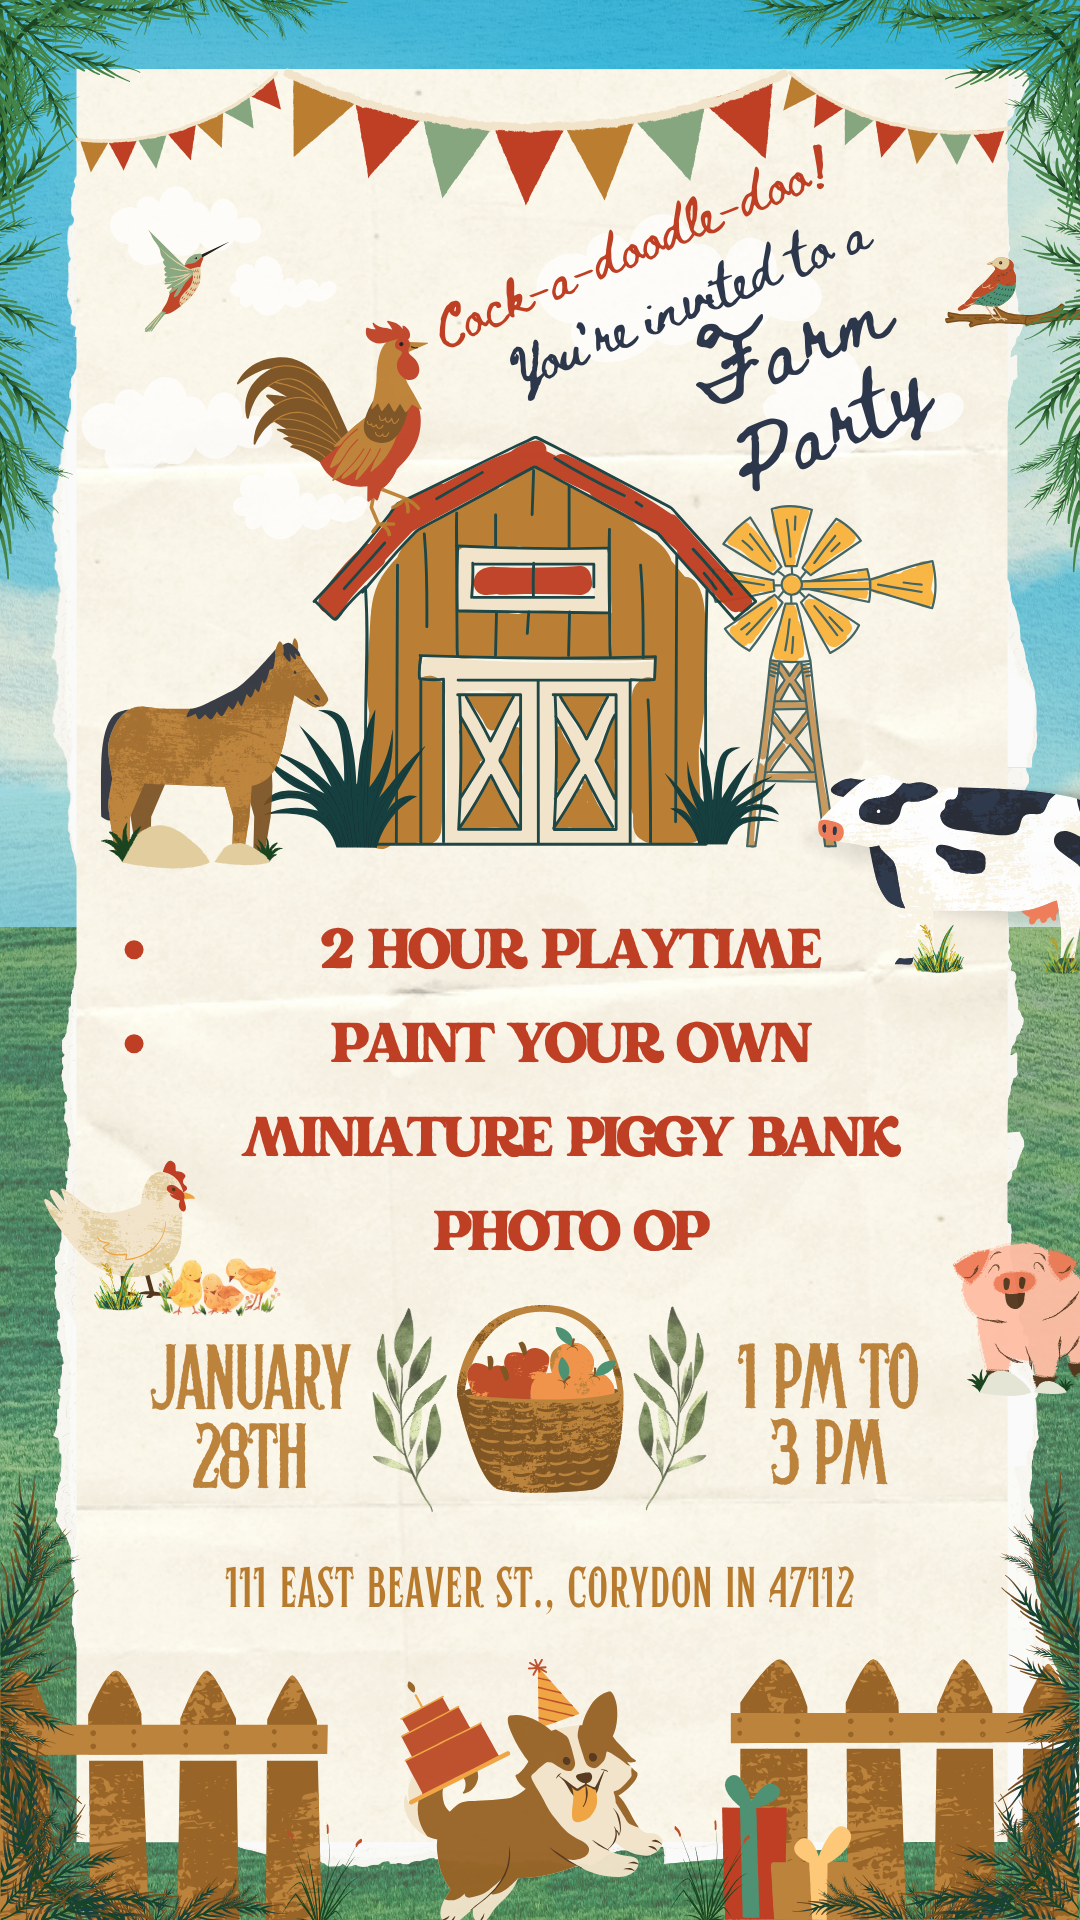 Farm Party January 28th 1-3pm